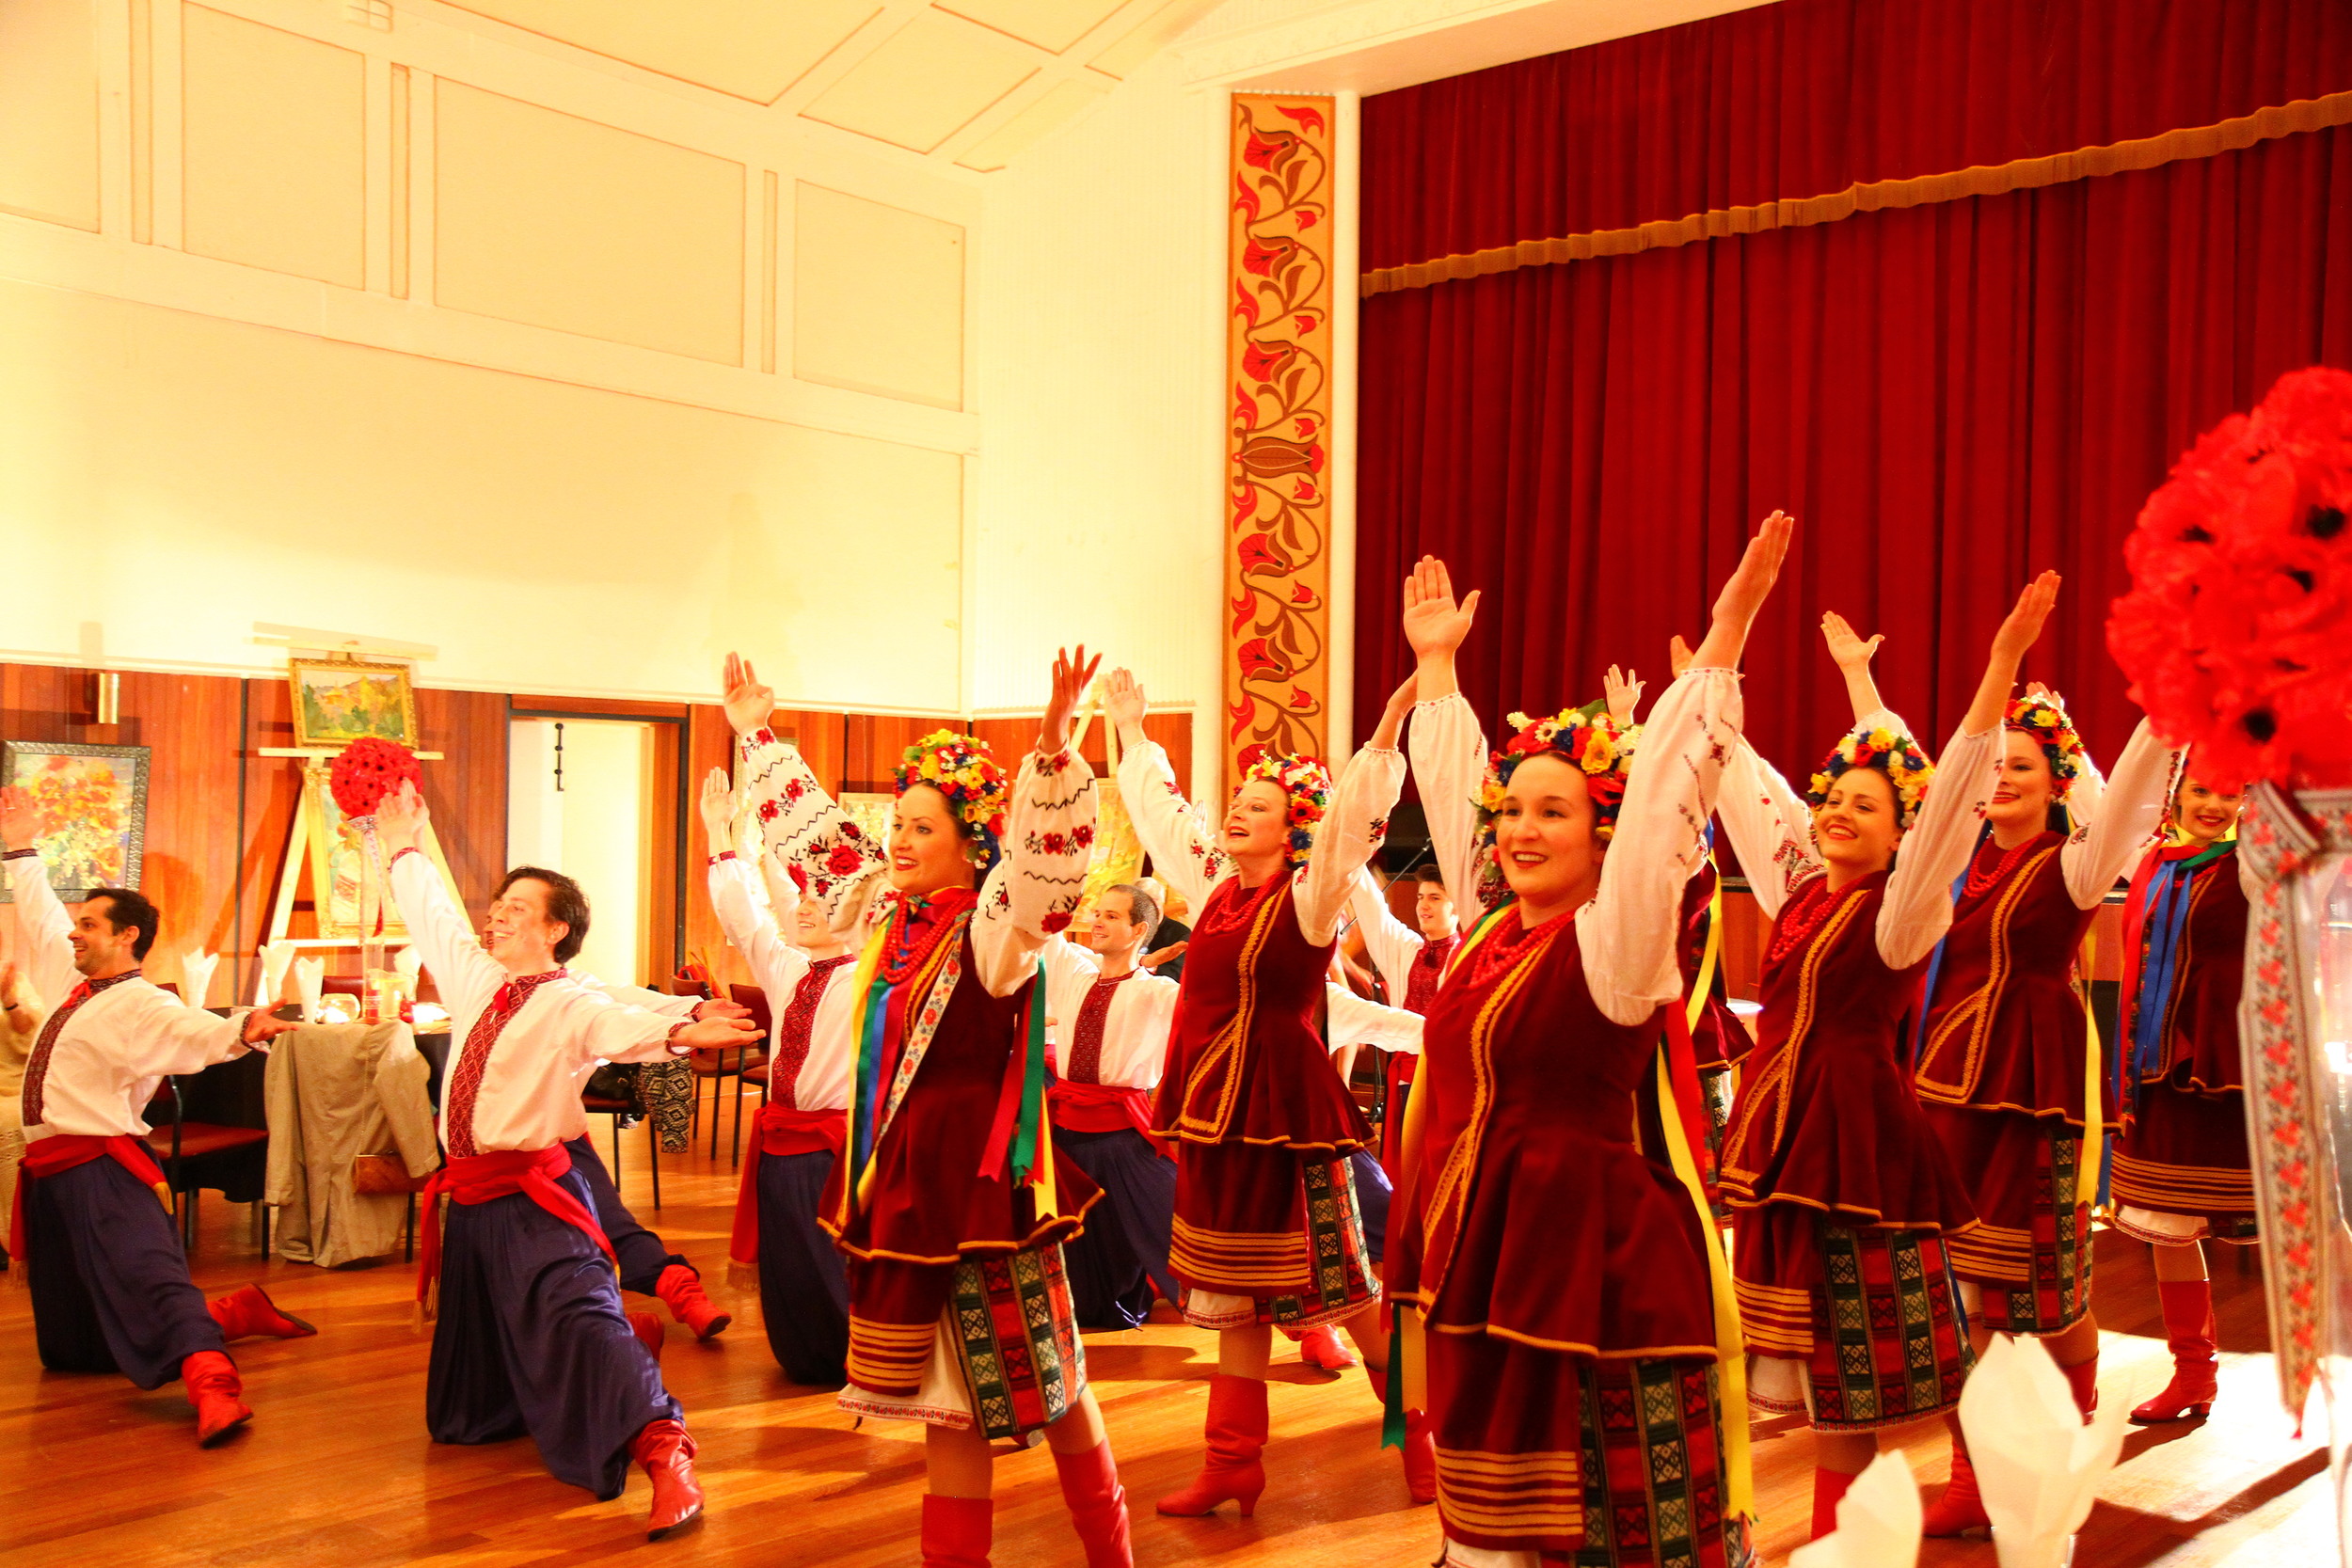 Ukrainian Night of Art, Culture and Dance